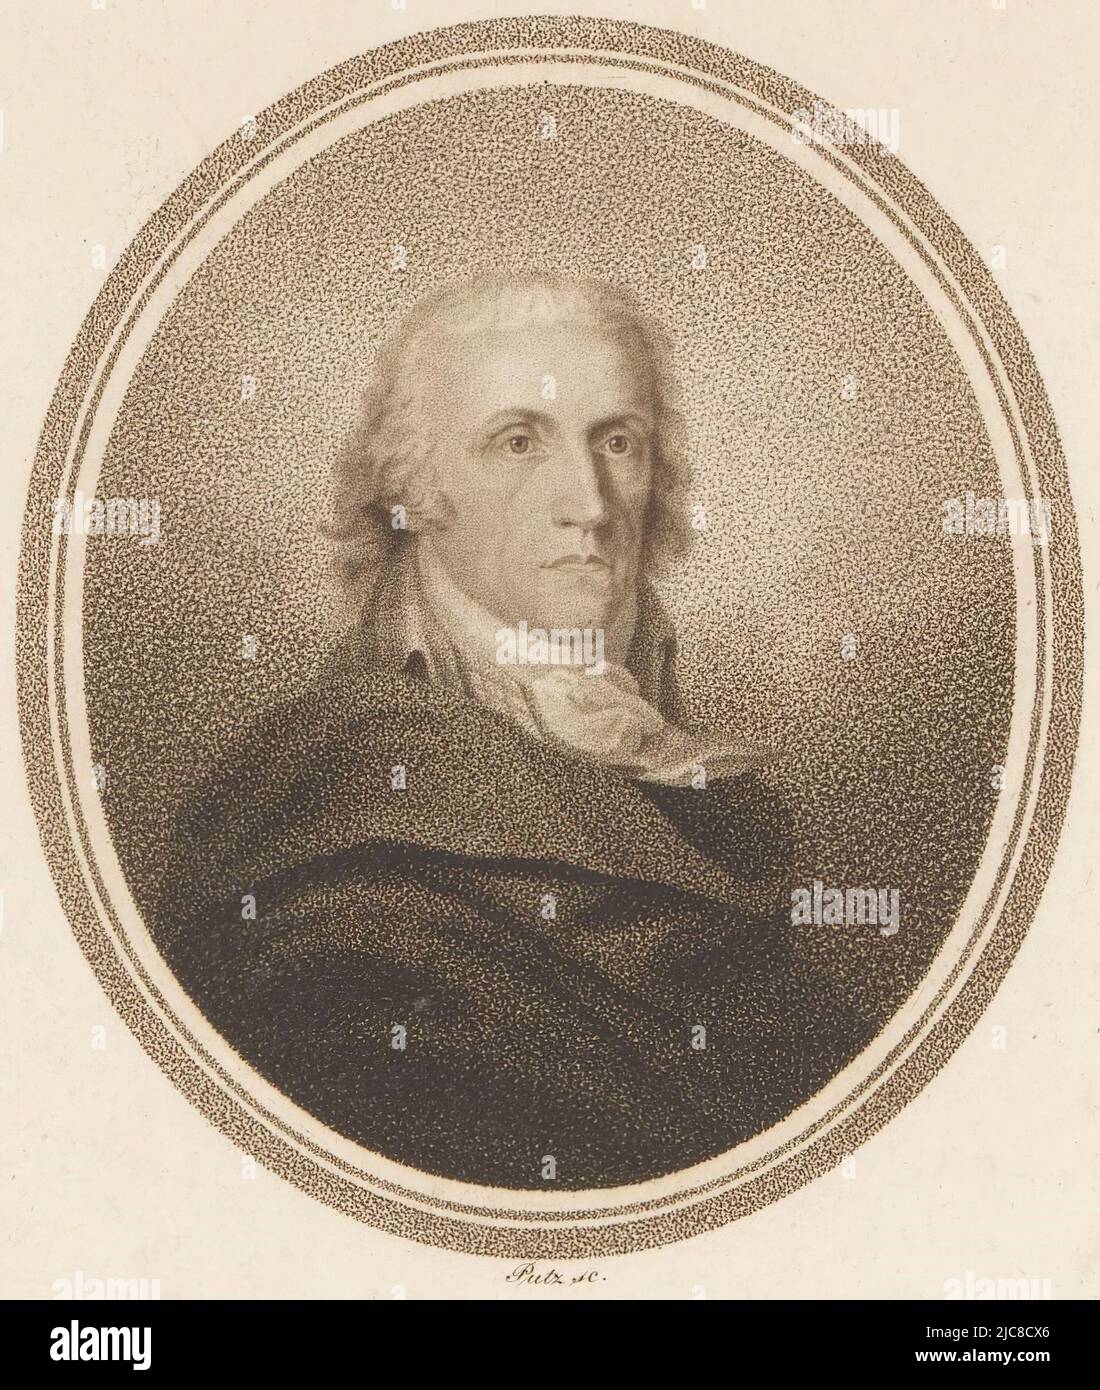 Portrait of Johann Adam Schmidt, print maker: Johann Putz, (mentioned on object), 1750 - 1849, paper, h 224 mm - w 175 mm Stock Photo